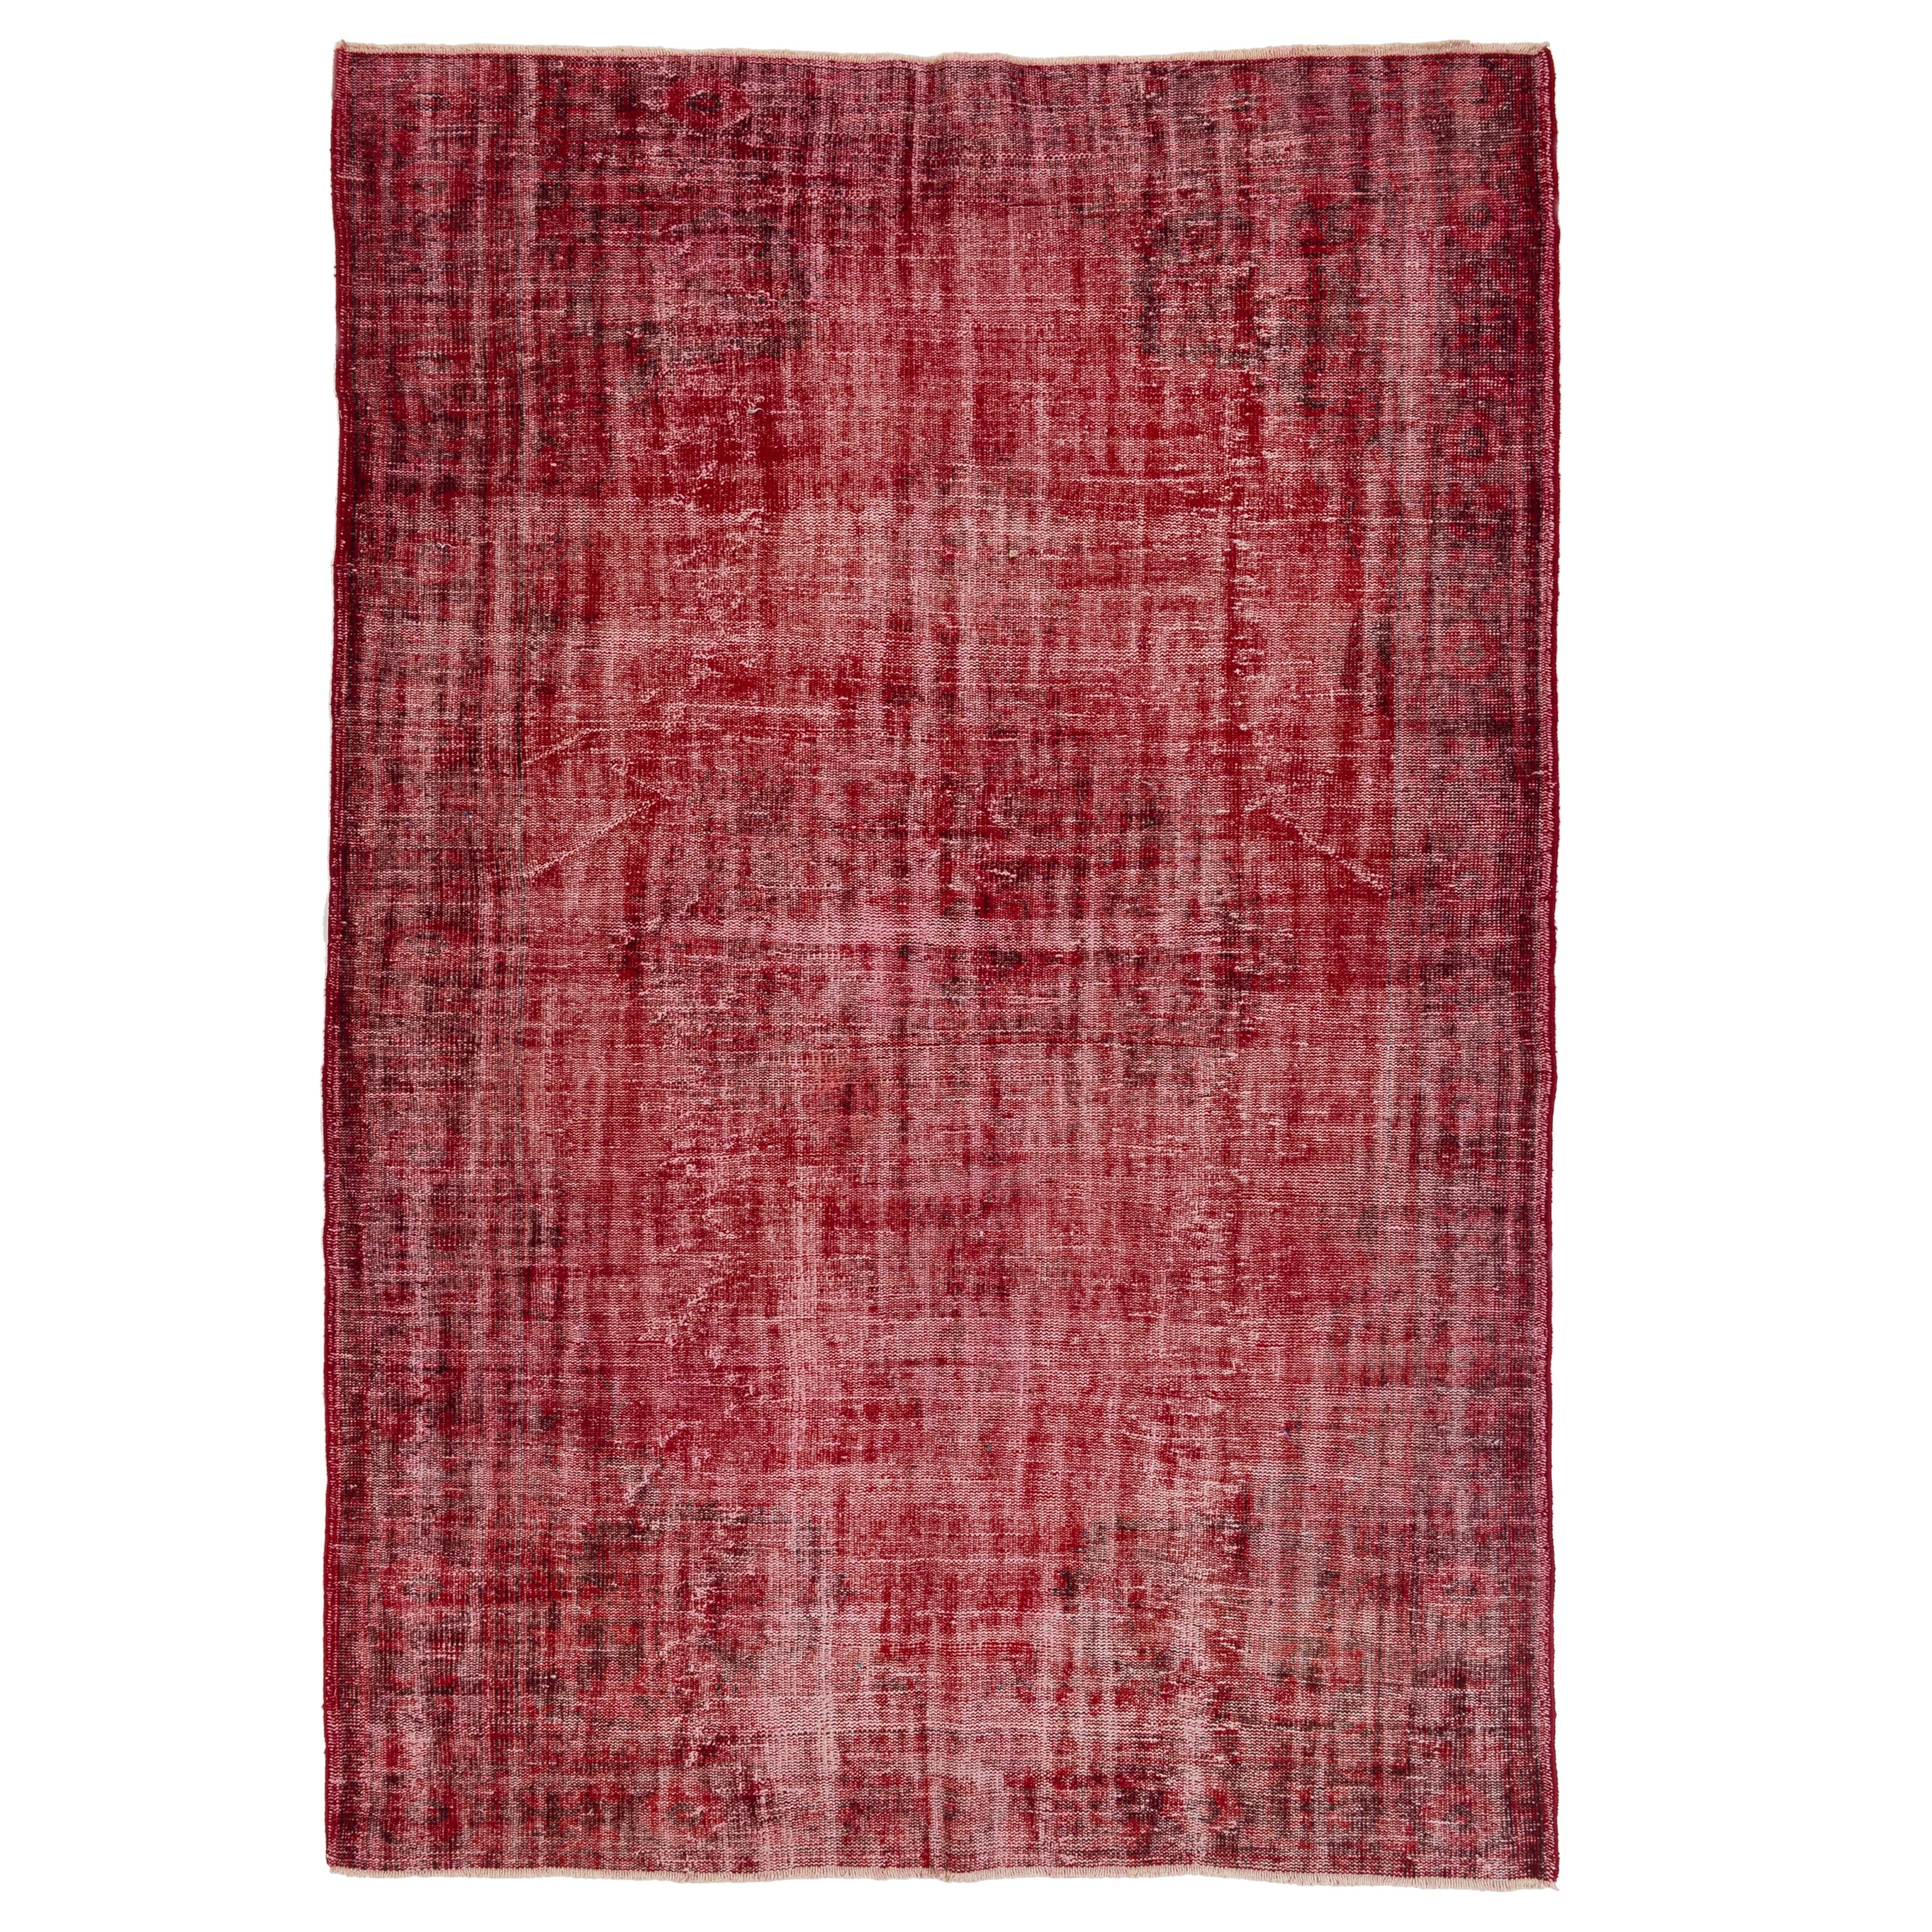 Shabby Chic Handmade Wool Rug in Burgundy Red, Vintage Turkish Carpet For Sale